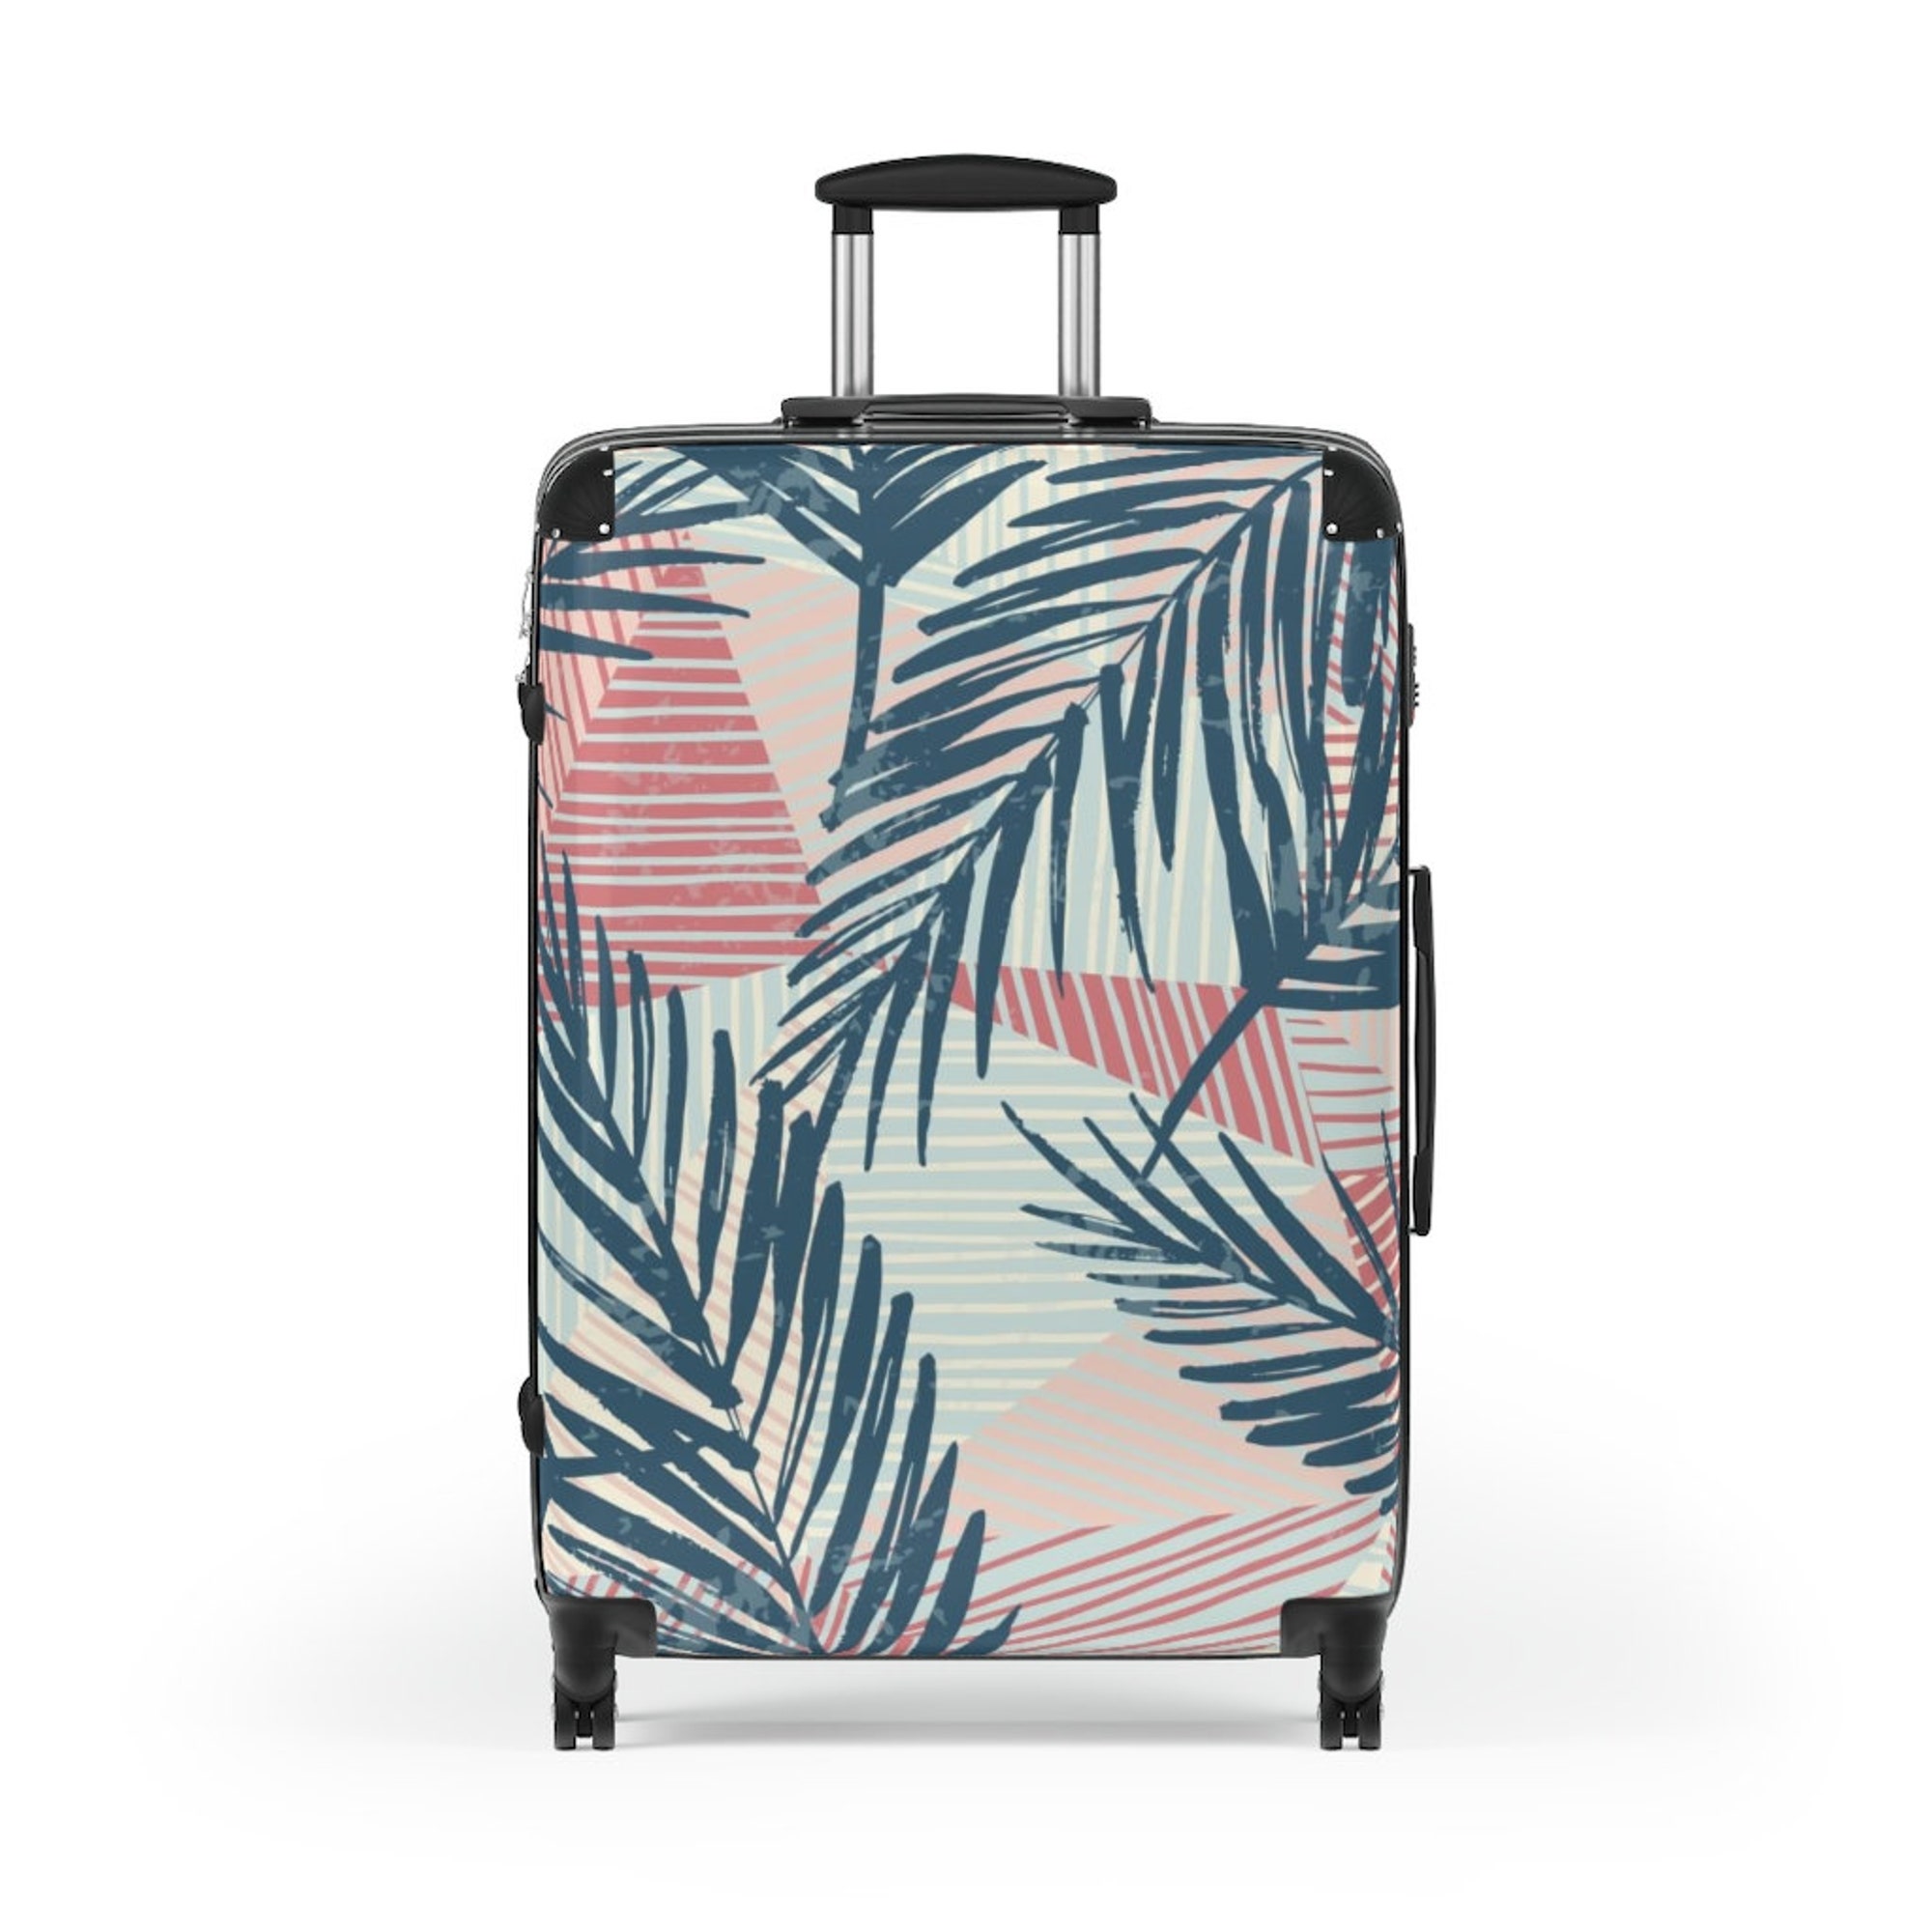 Discover The Bimini Suitcase